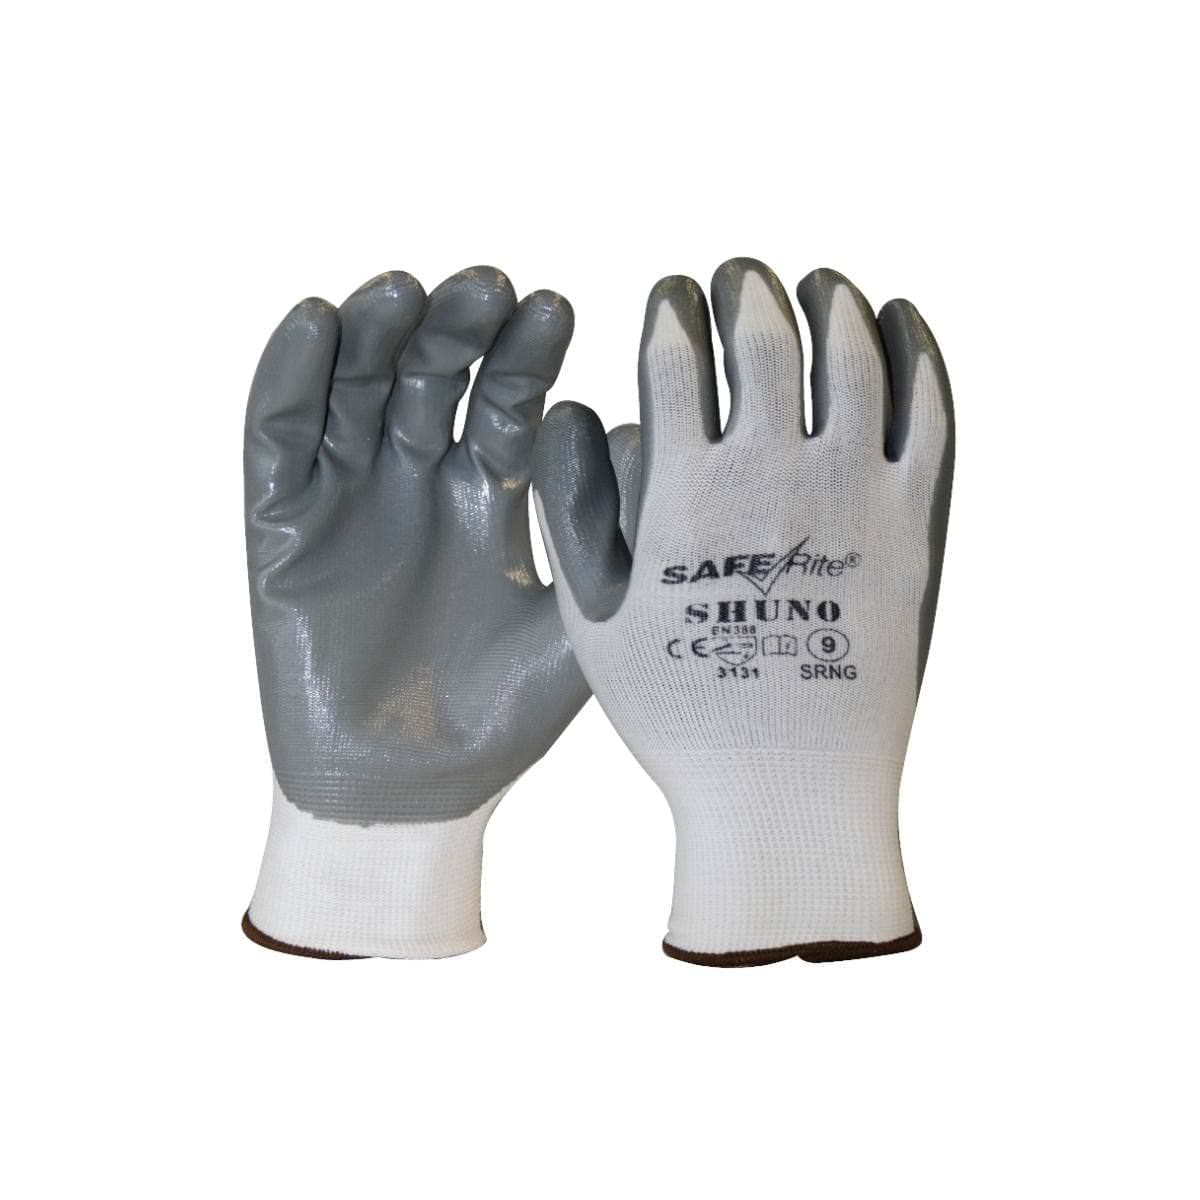 SafeRite® Shuno Nitrile Glove SRNG (Pack of 12)